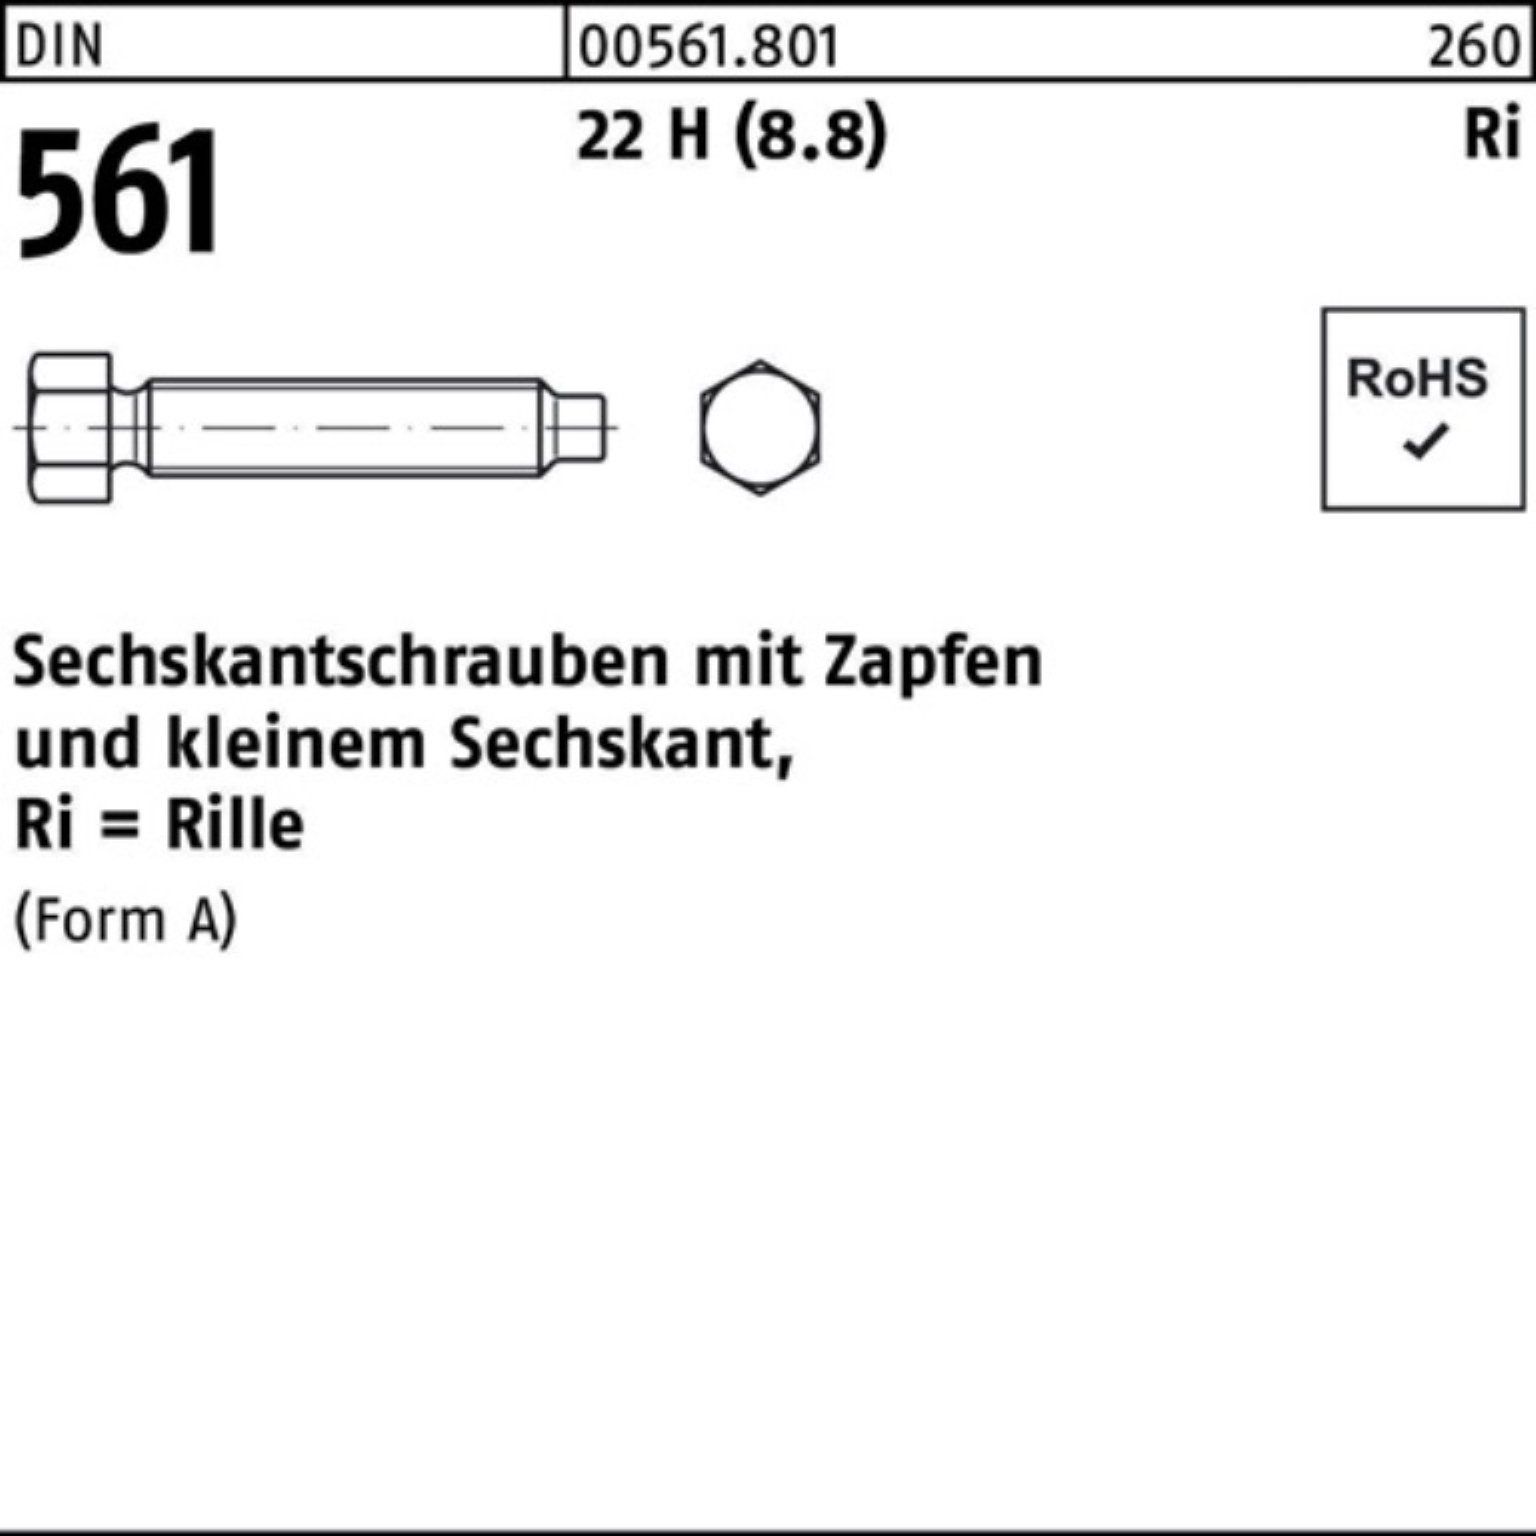 【Großes Set】 Reyher Sechskantschraube 100 St 100er Sechskantschraube AM Pack 24x Zapfen (8.8) 1 H DIN 561 22